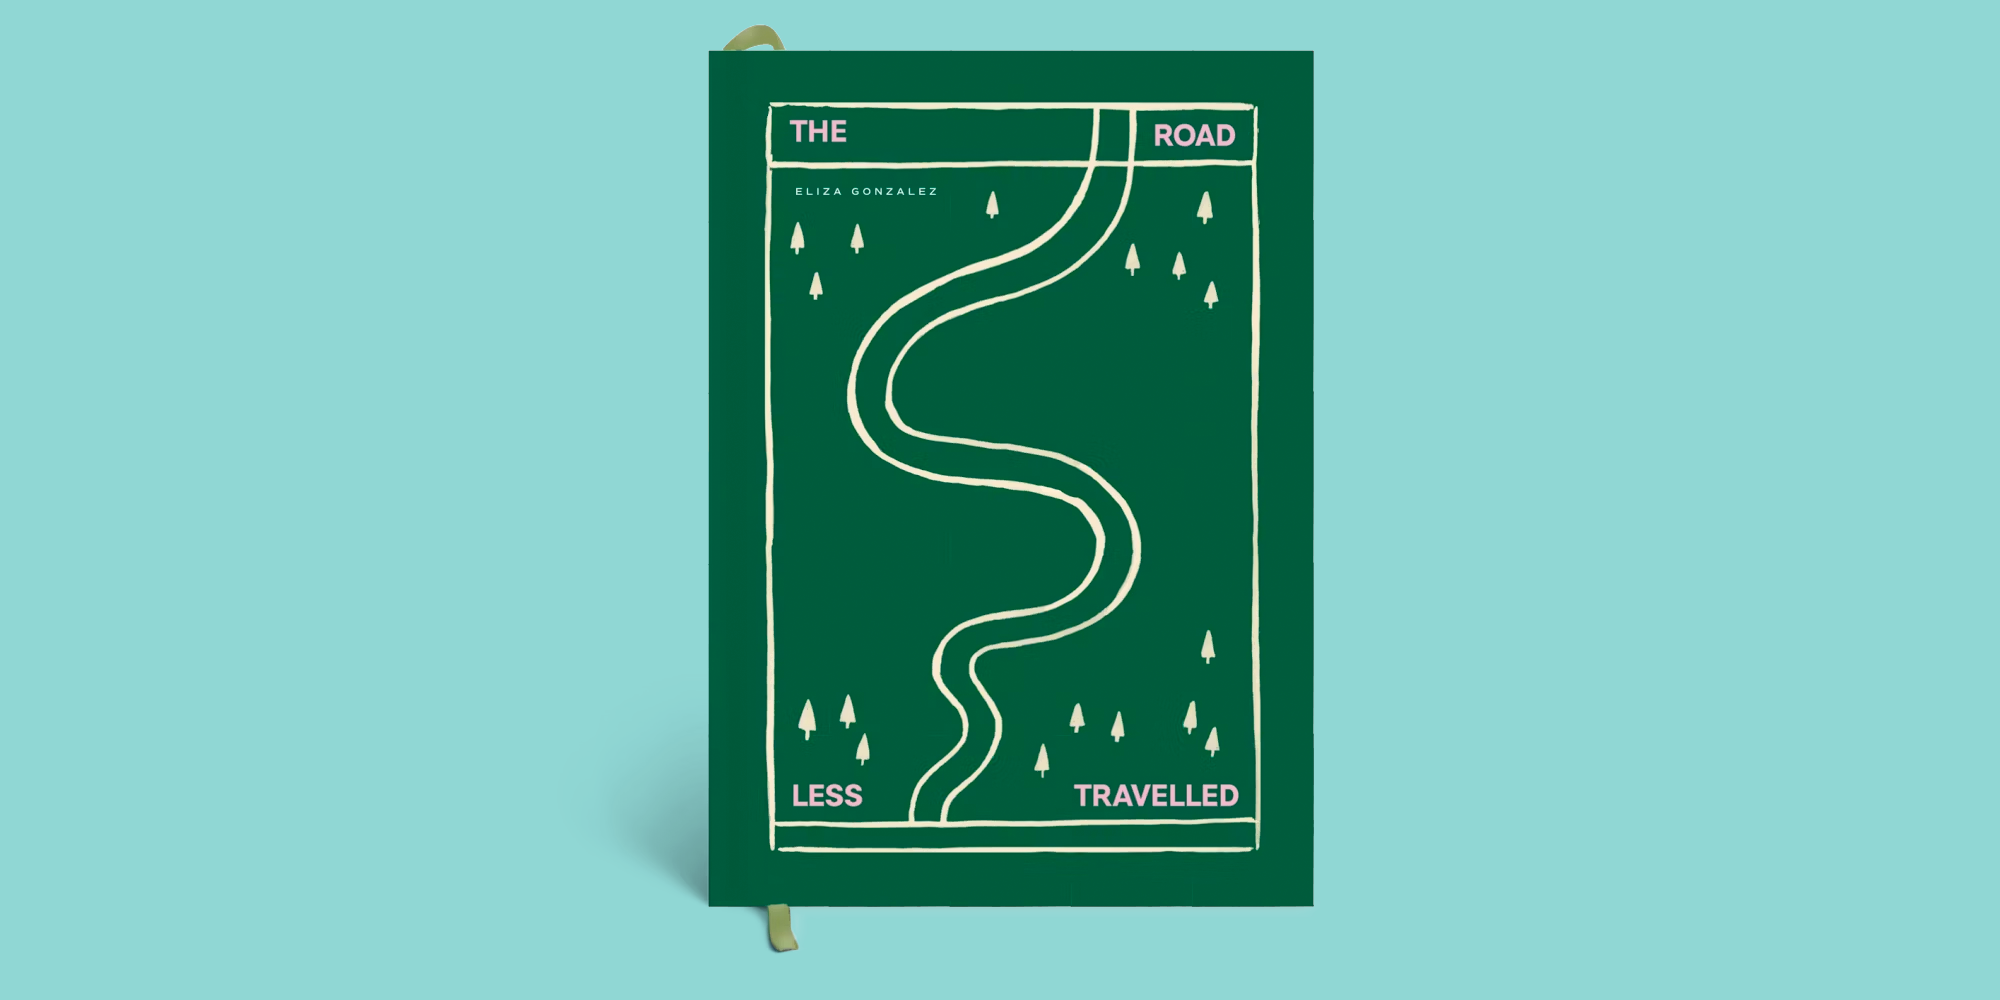 Kids Personalised Travel Journal Printable Kit Vacation Memory